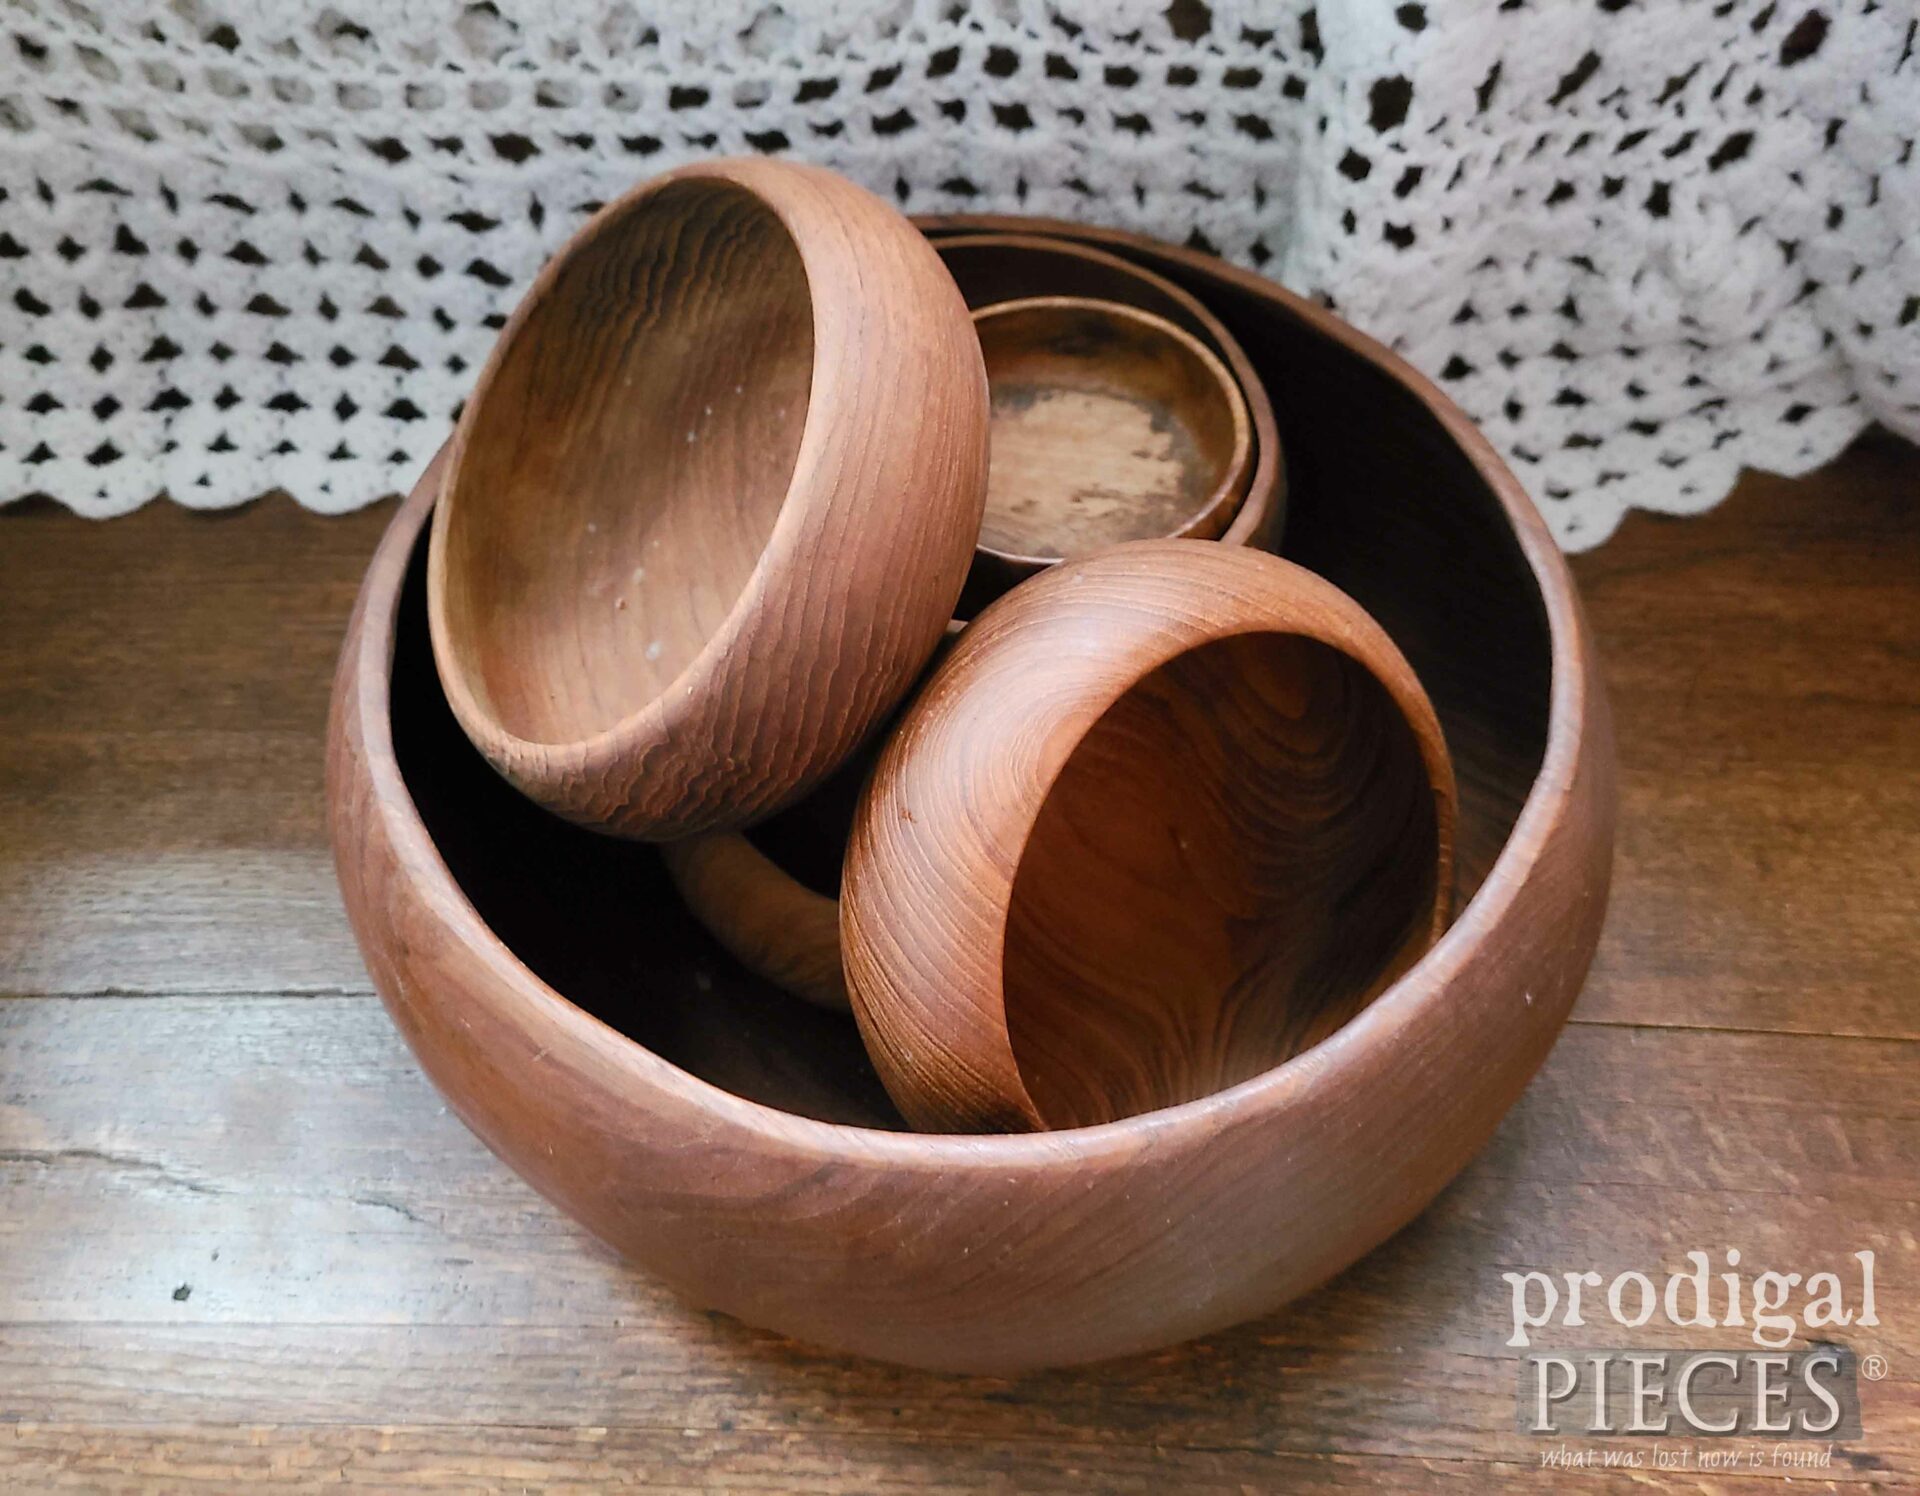 Wooden Salad Bowls Before | prodigalpieces.com #prodigalpieces